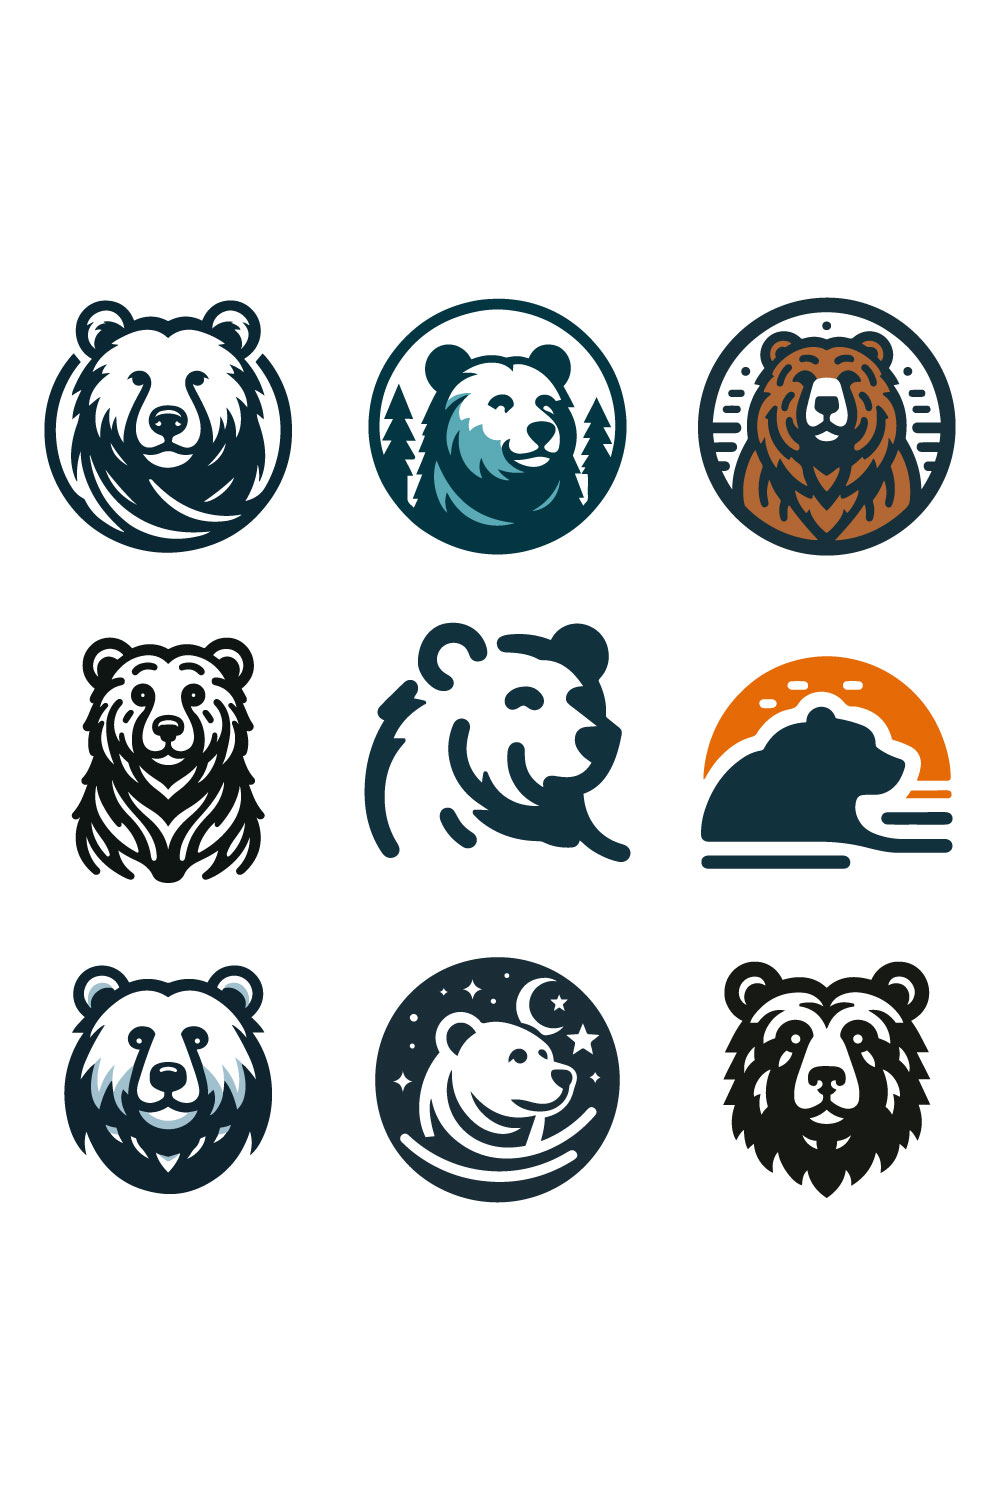 9 Bear Logos Vector Illustration pinterest preview image.